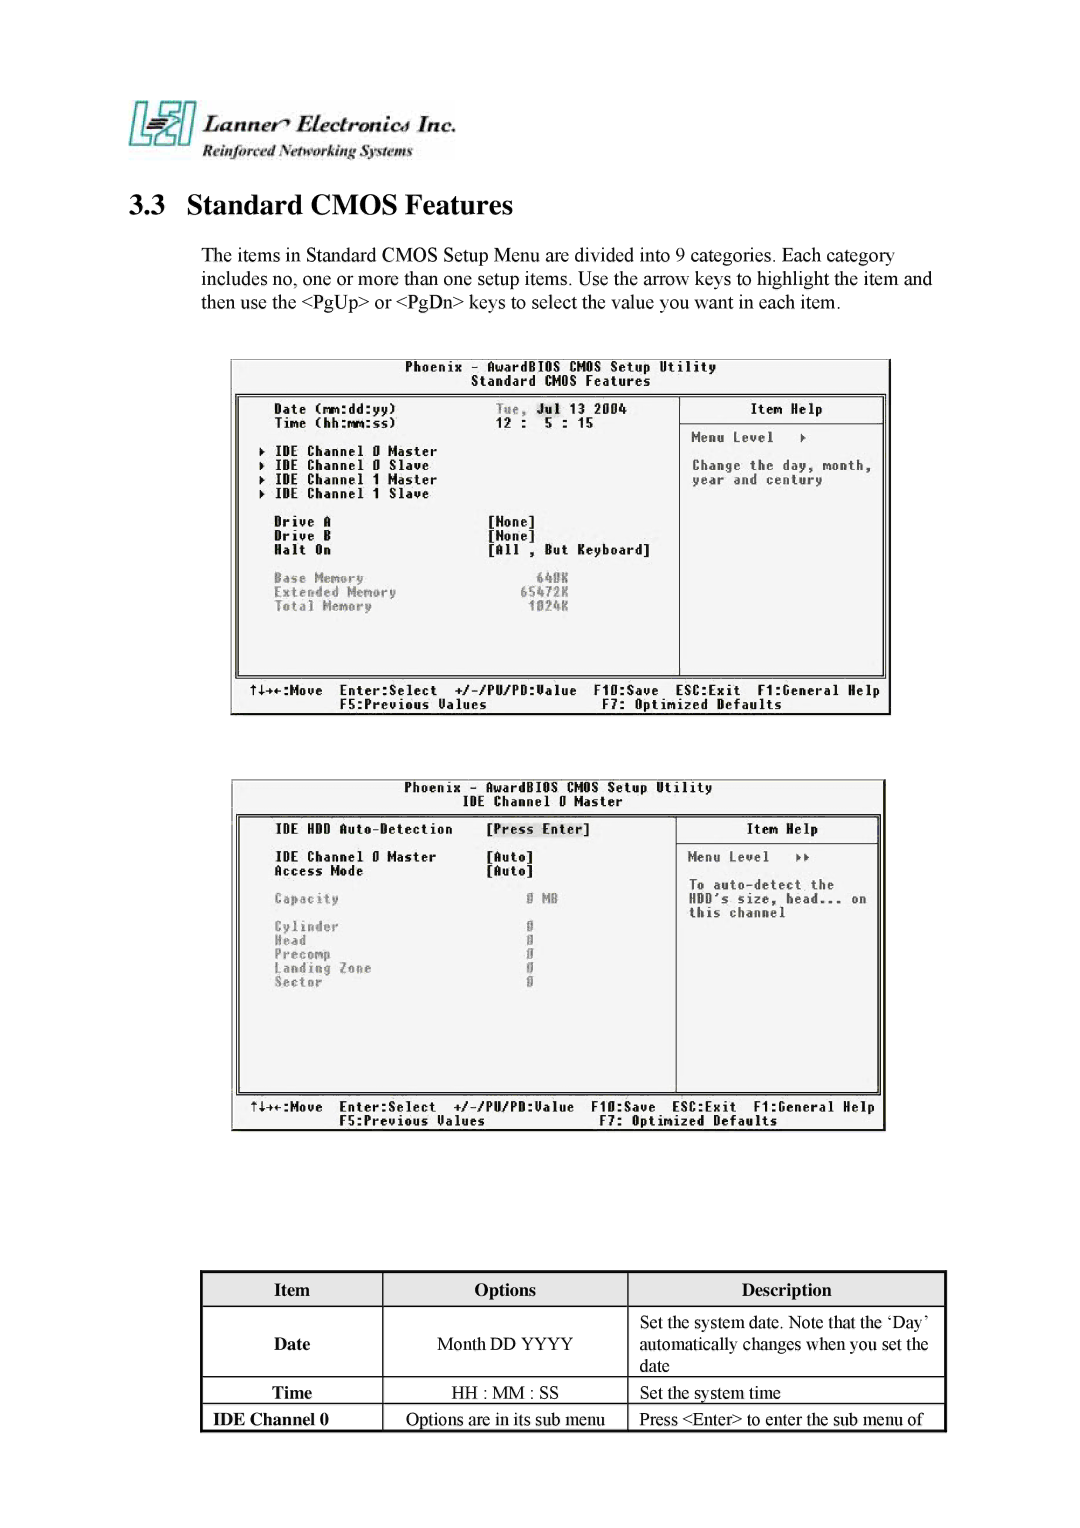 Lanner electronic FW-7890 user manual Standard Cmos Features, Options Description Date 